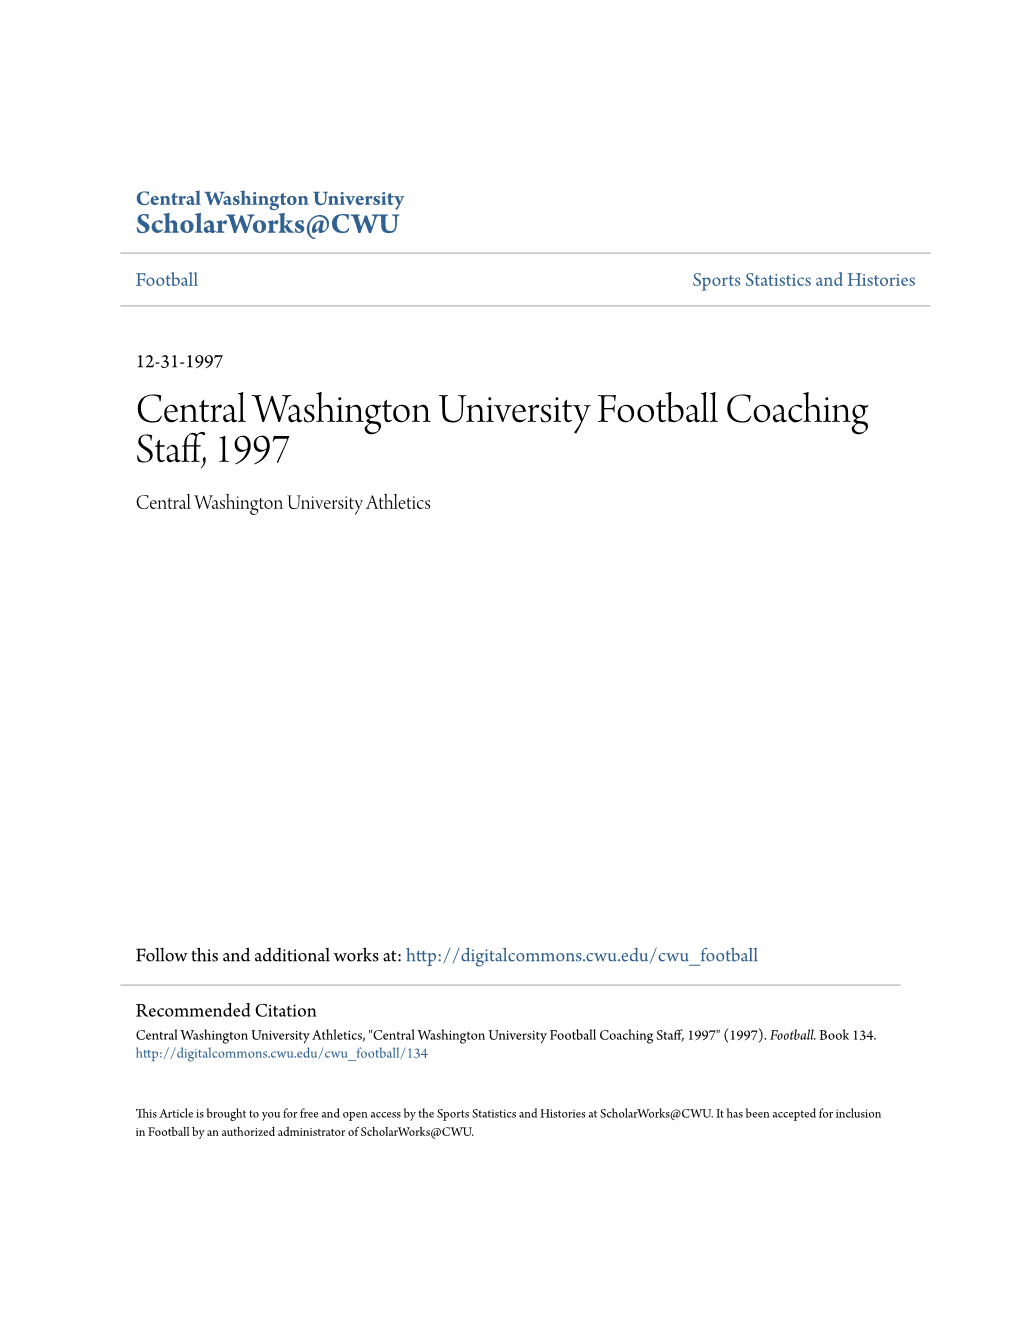 Central Washington University Football Coaching Staff, 1997 Central Washington University Athletics